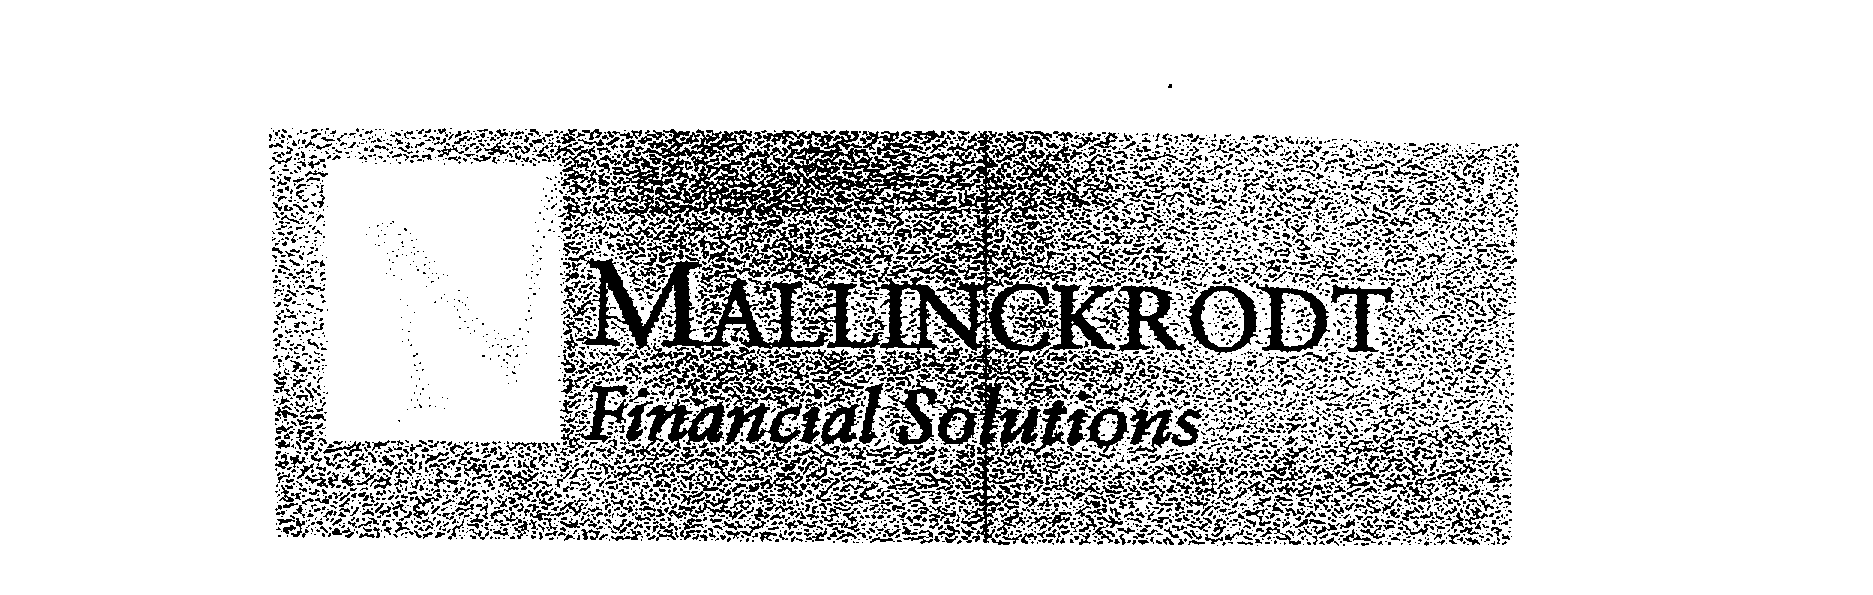  M MALLINCKRODT FINANCIAL SOLUTIONS